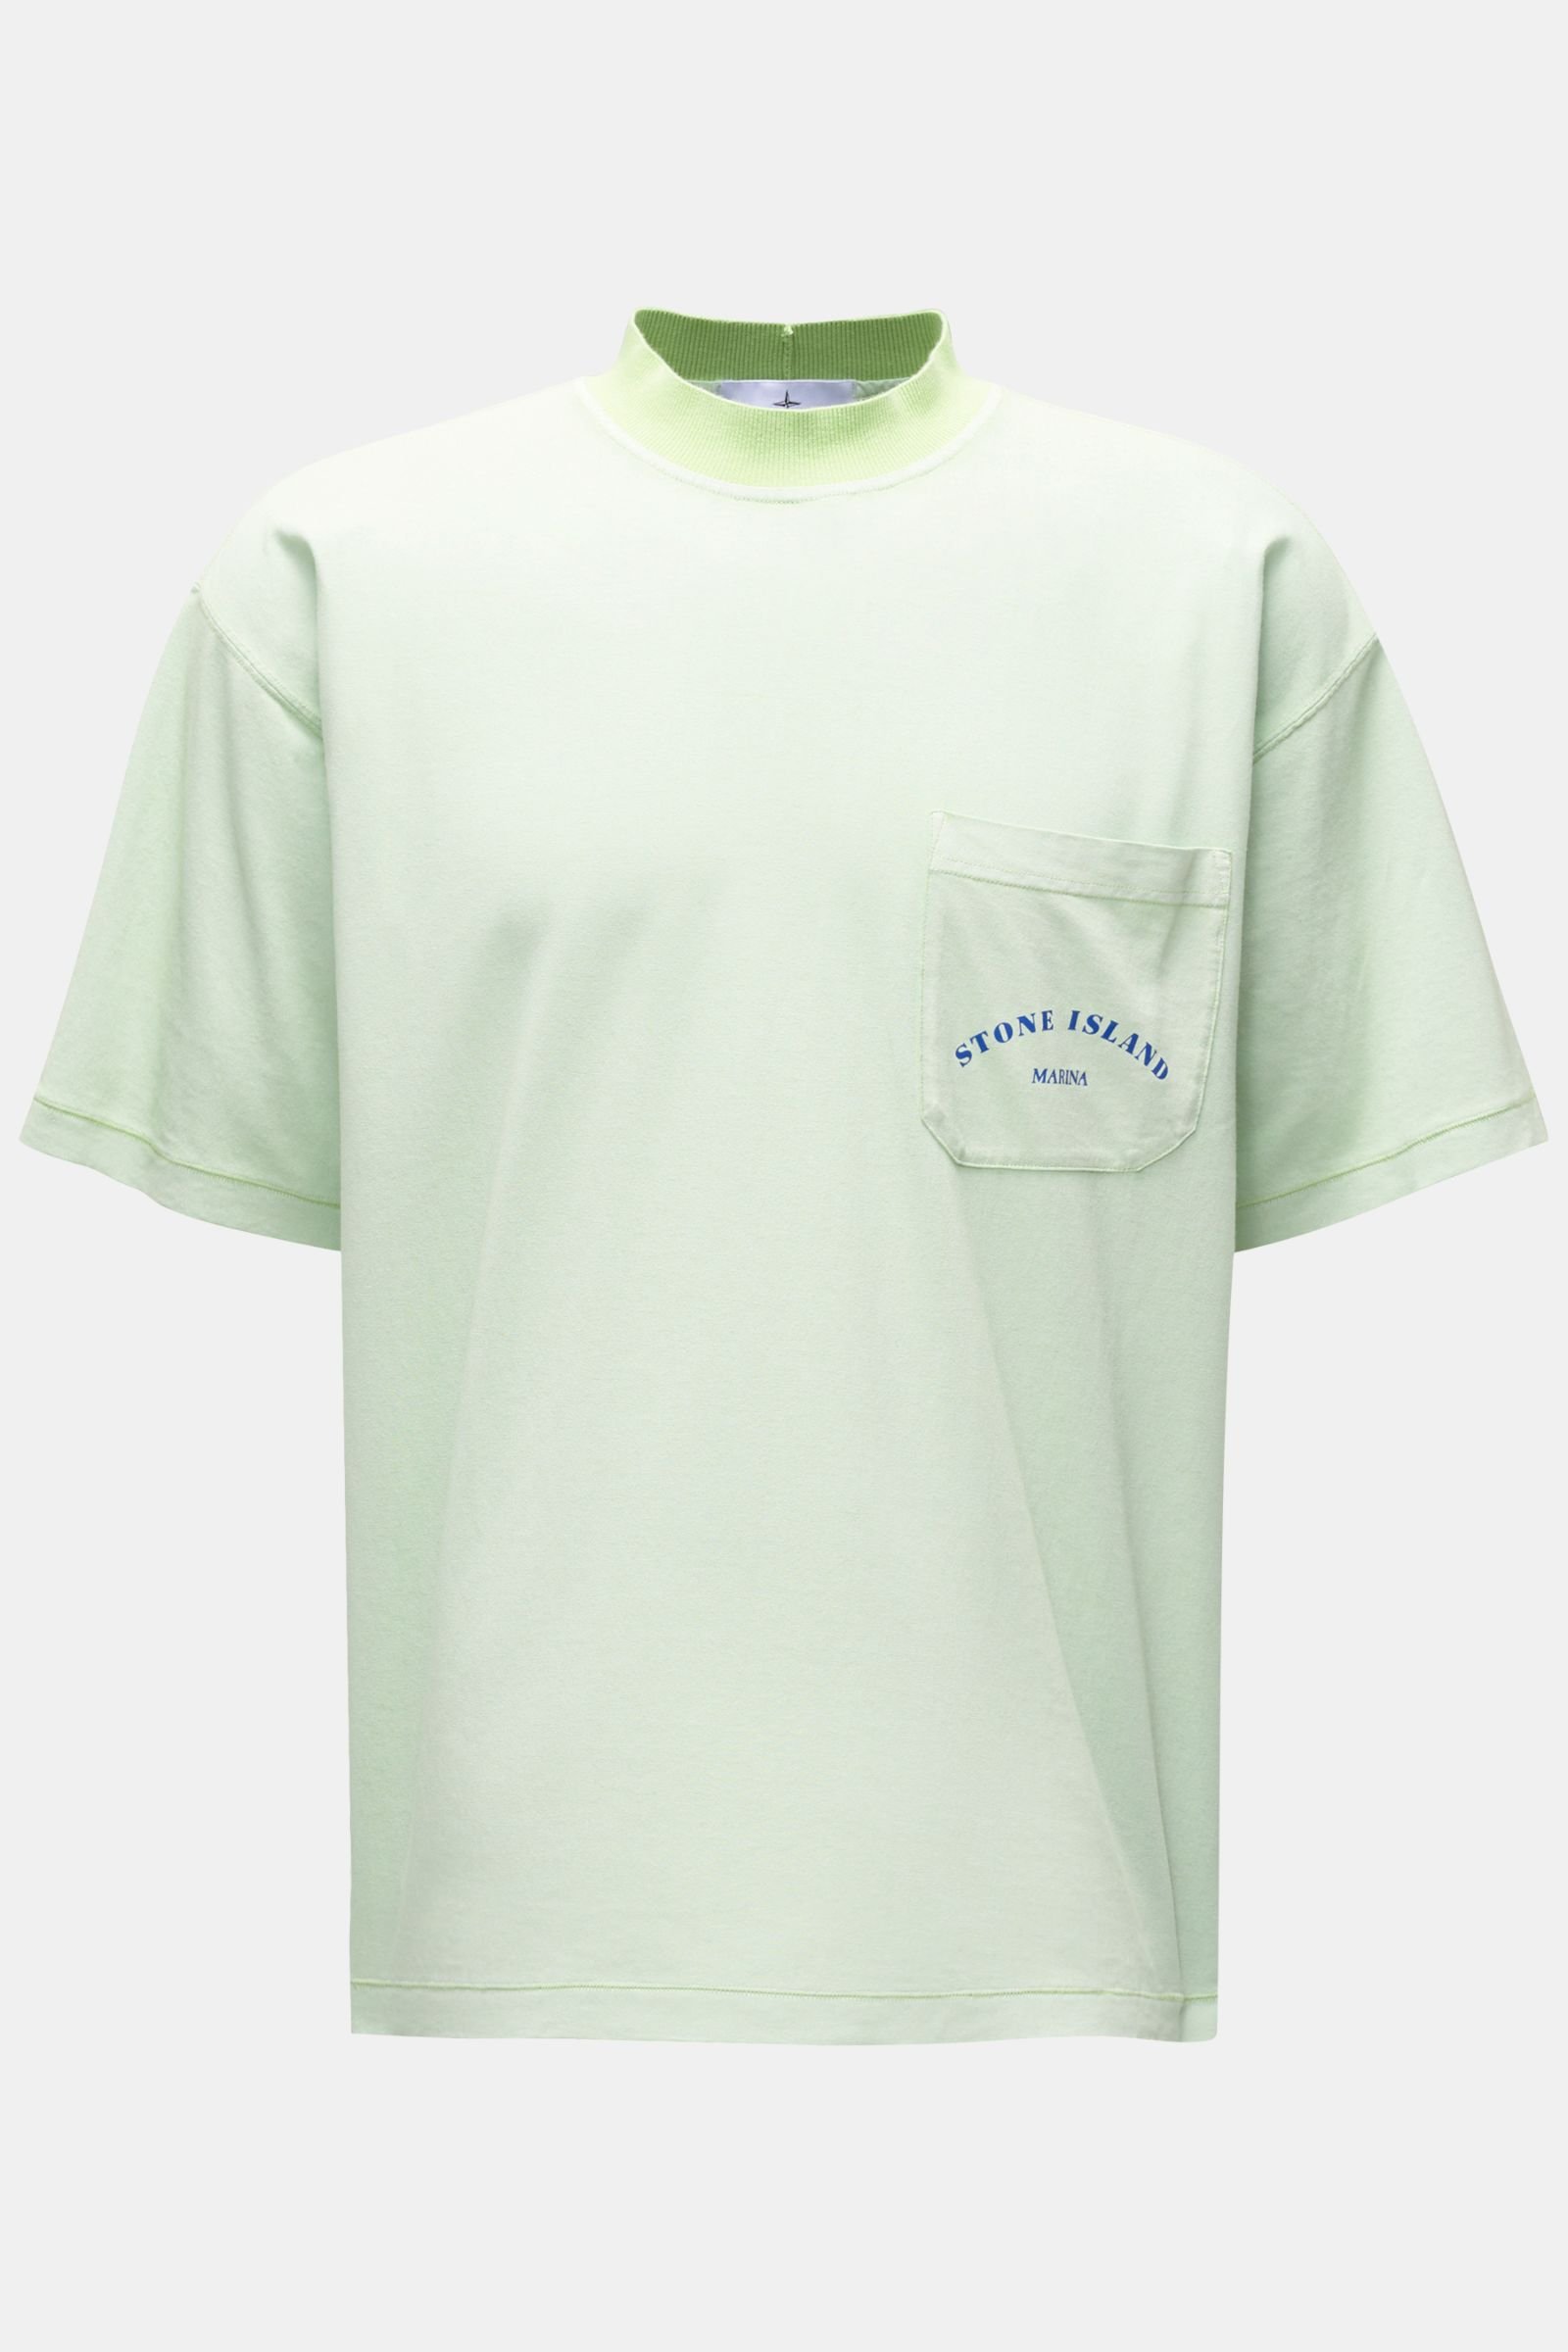 Crew neck T-shirt 'Marina' mint green